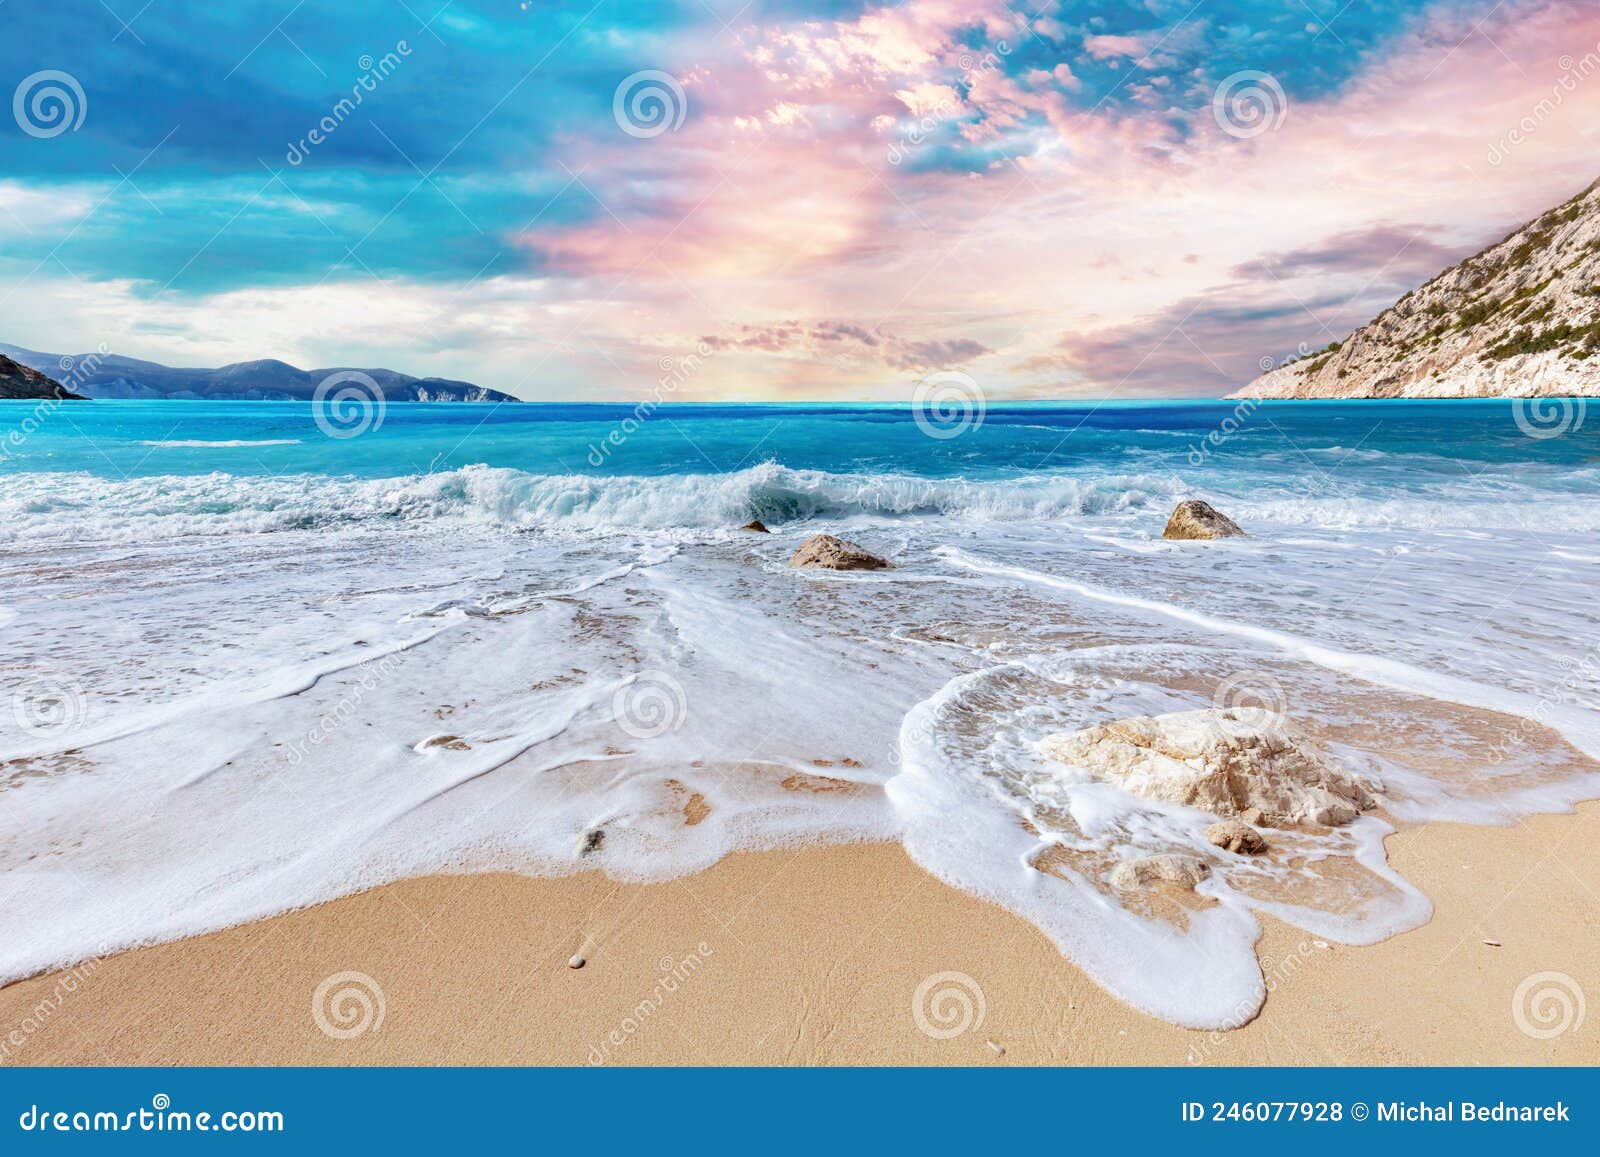 summer beach in greece. myrtos beach in kefalonia